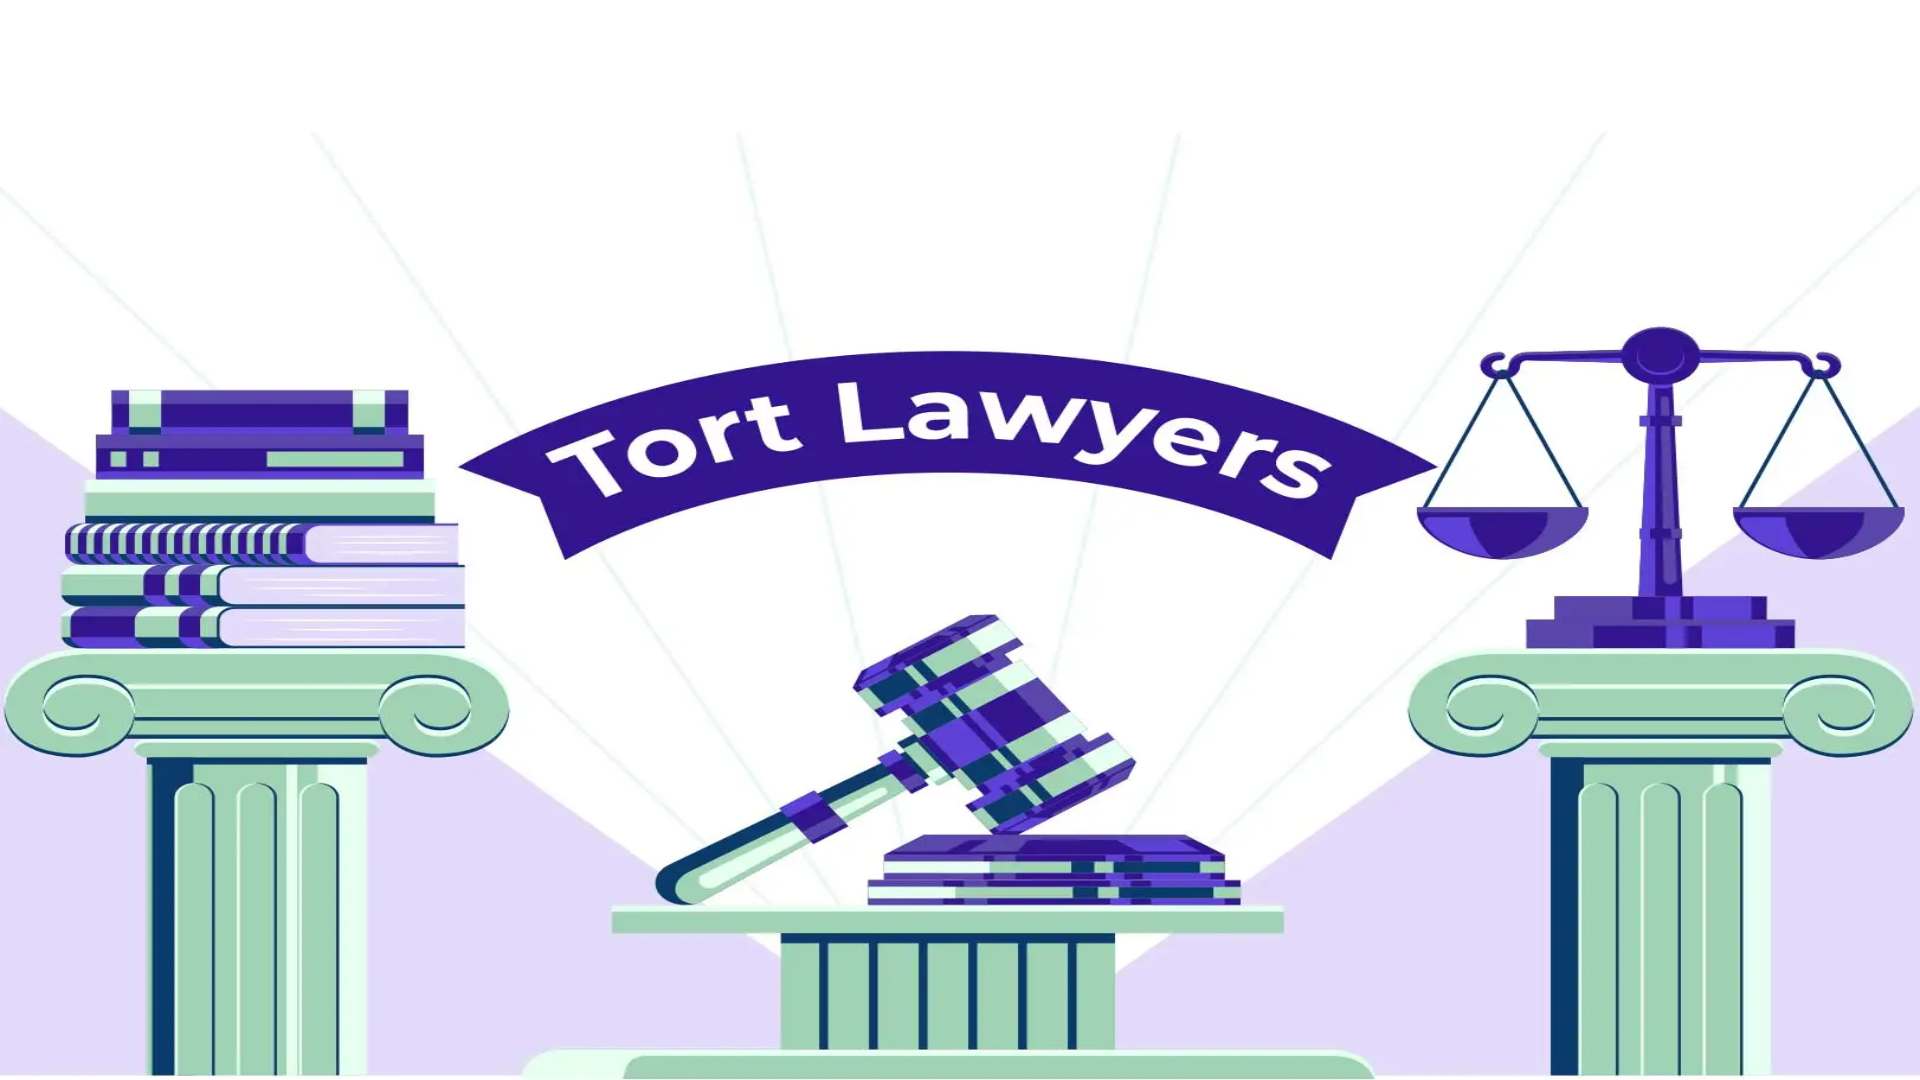 tort lawyers